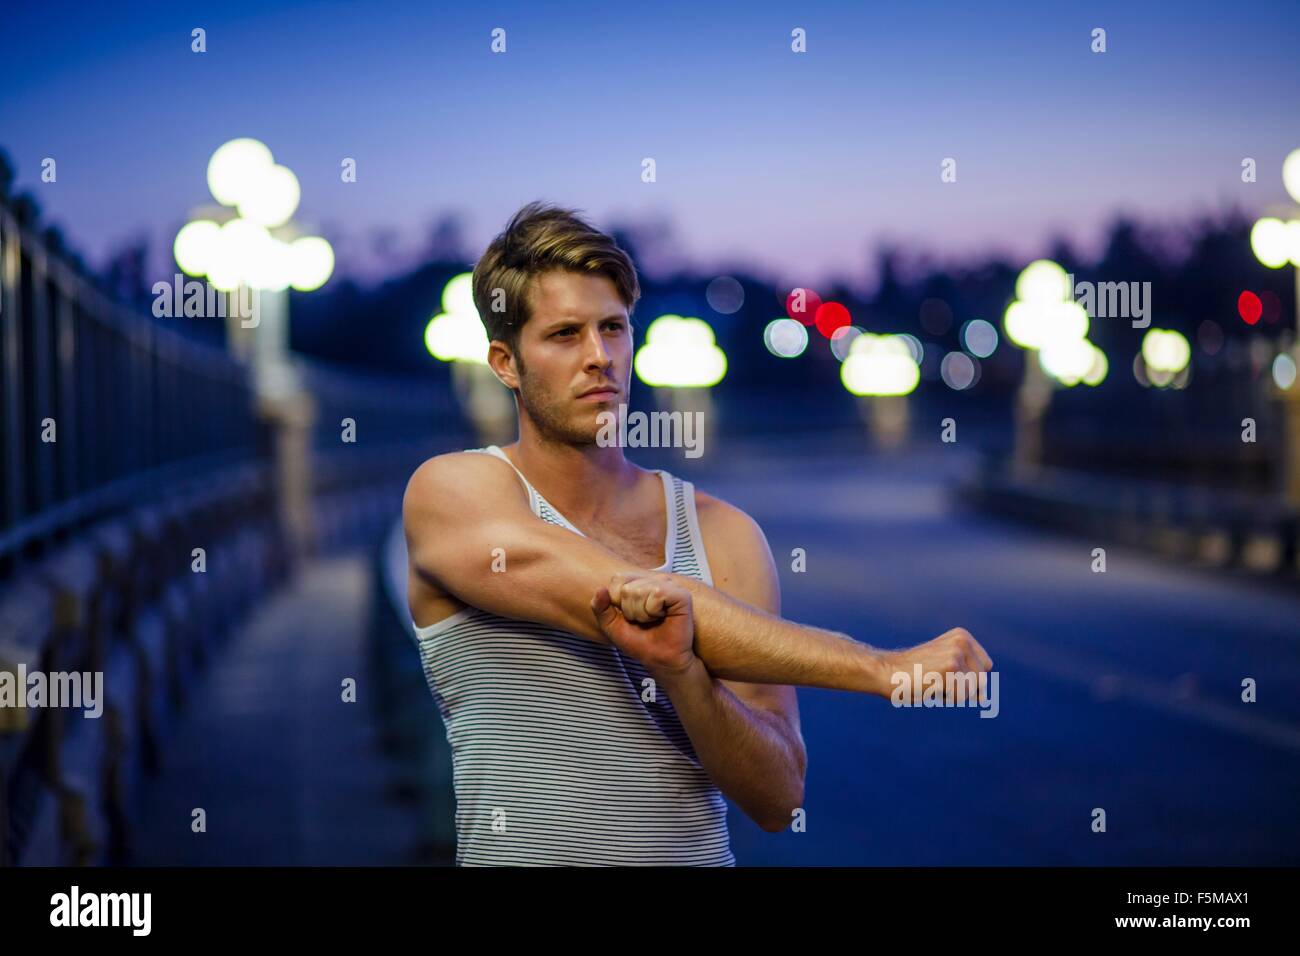 Jogger stretching sur pont, Arroyo Seco, Pasadena, Californie, USA Banque D'Images